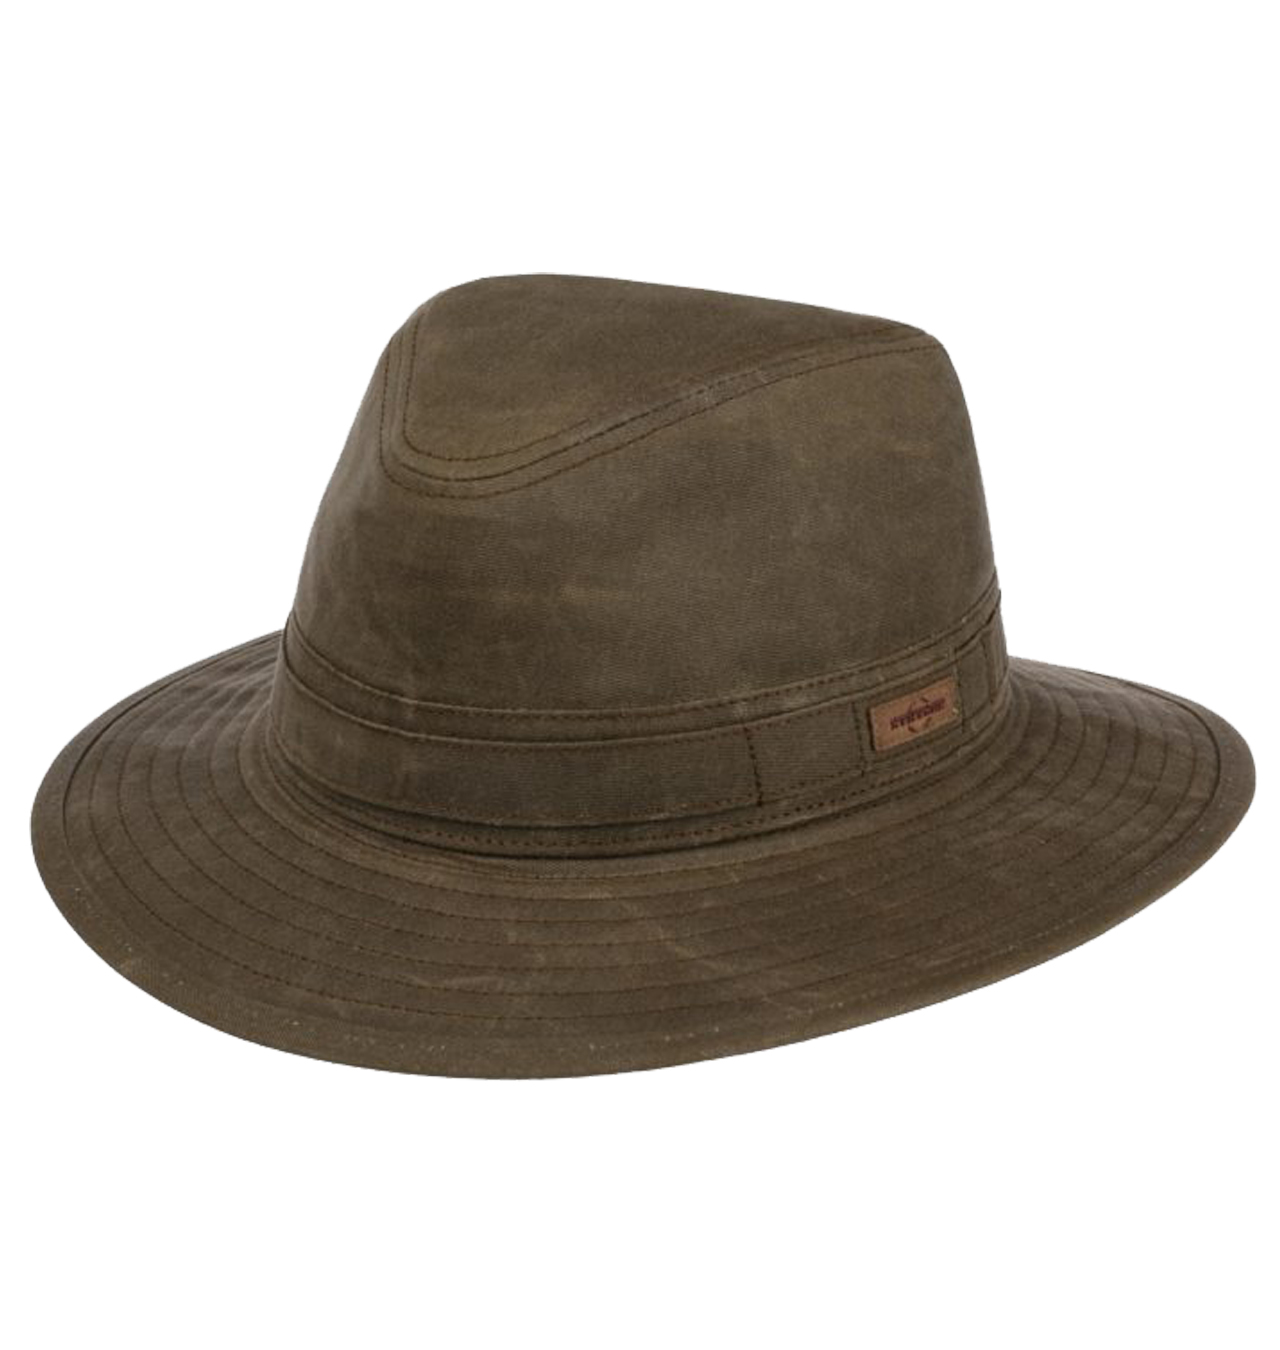 Stetson - Vintage Wax Traveller Cotton Hat - Olive